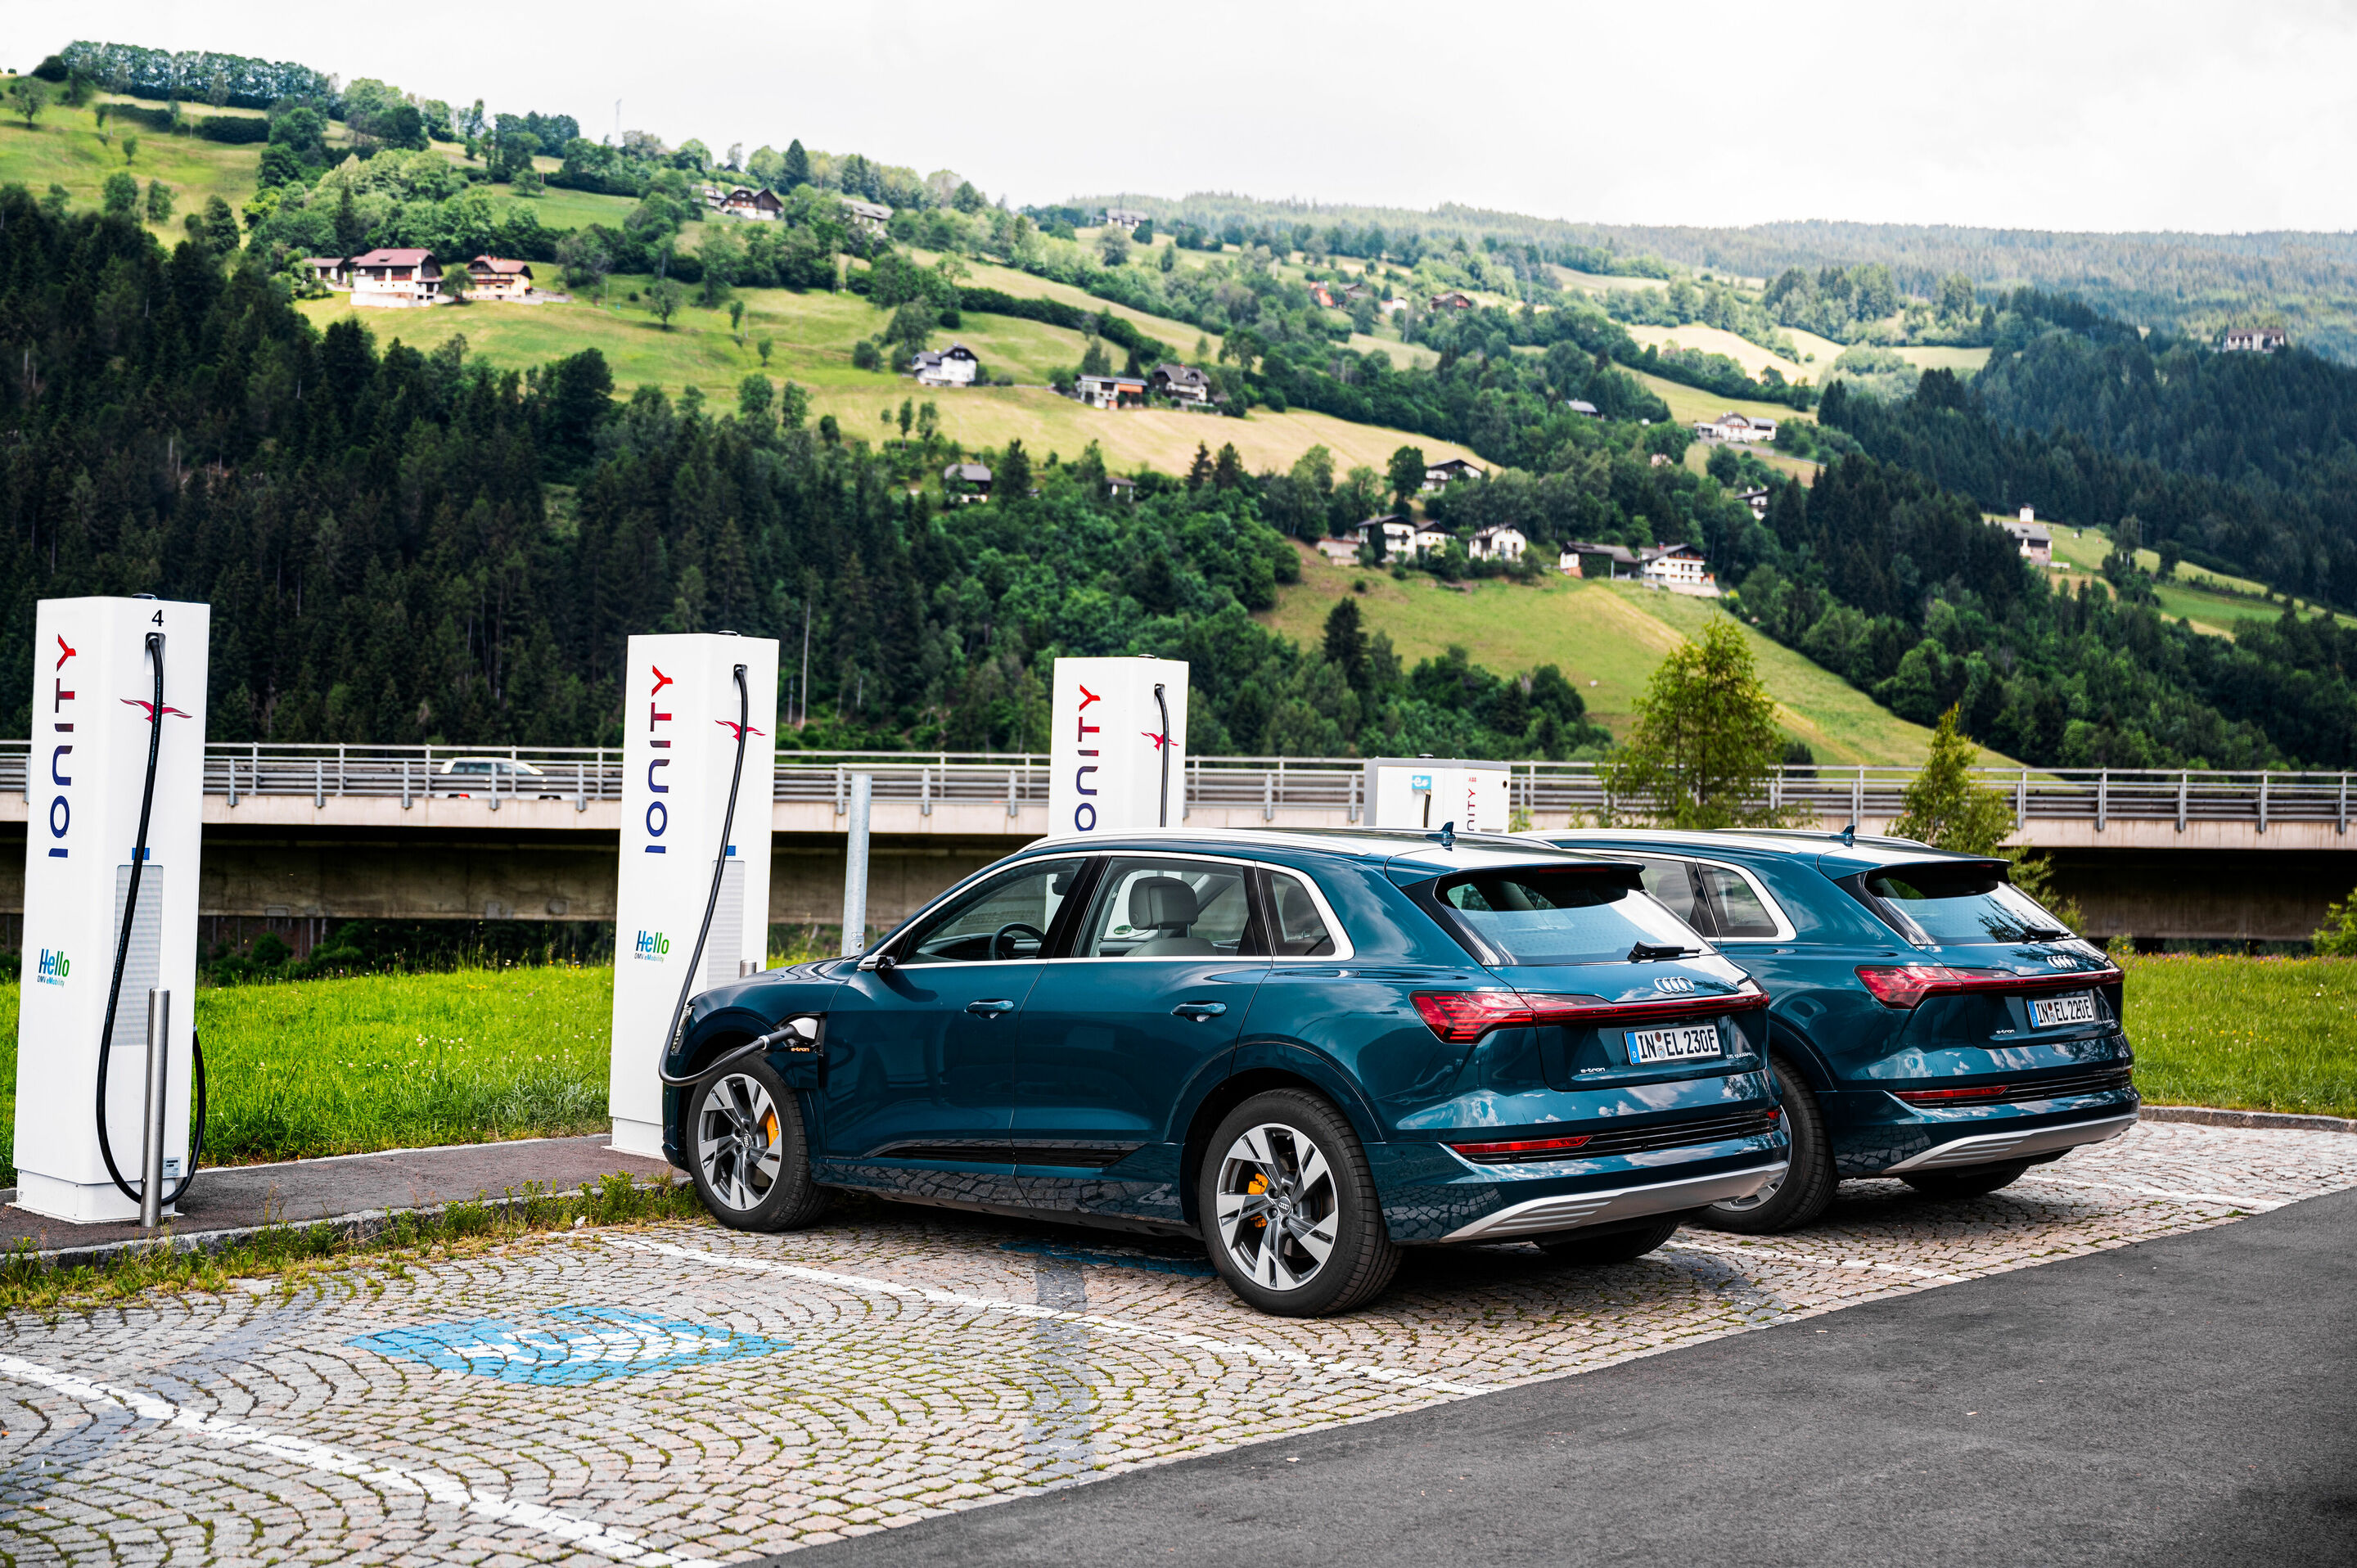 Audi e-tron Charging Service